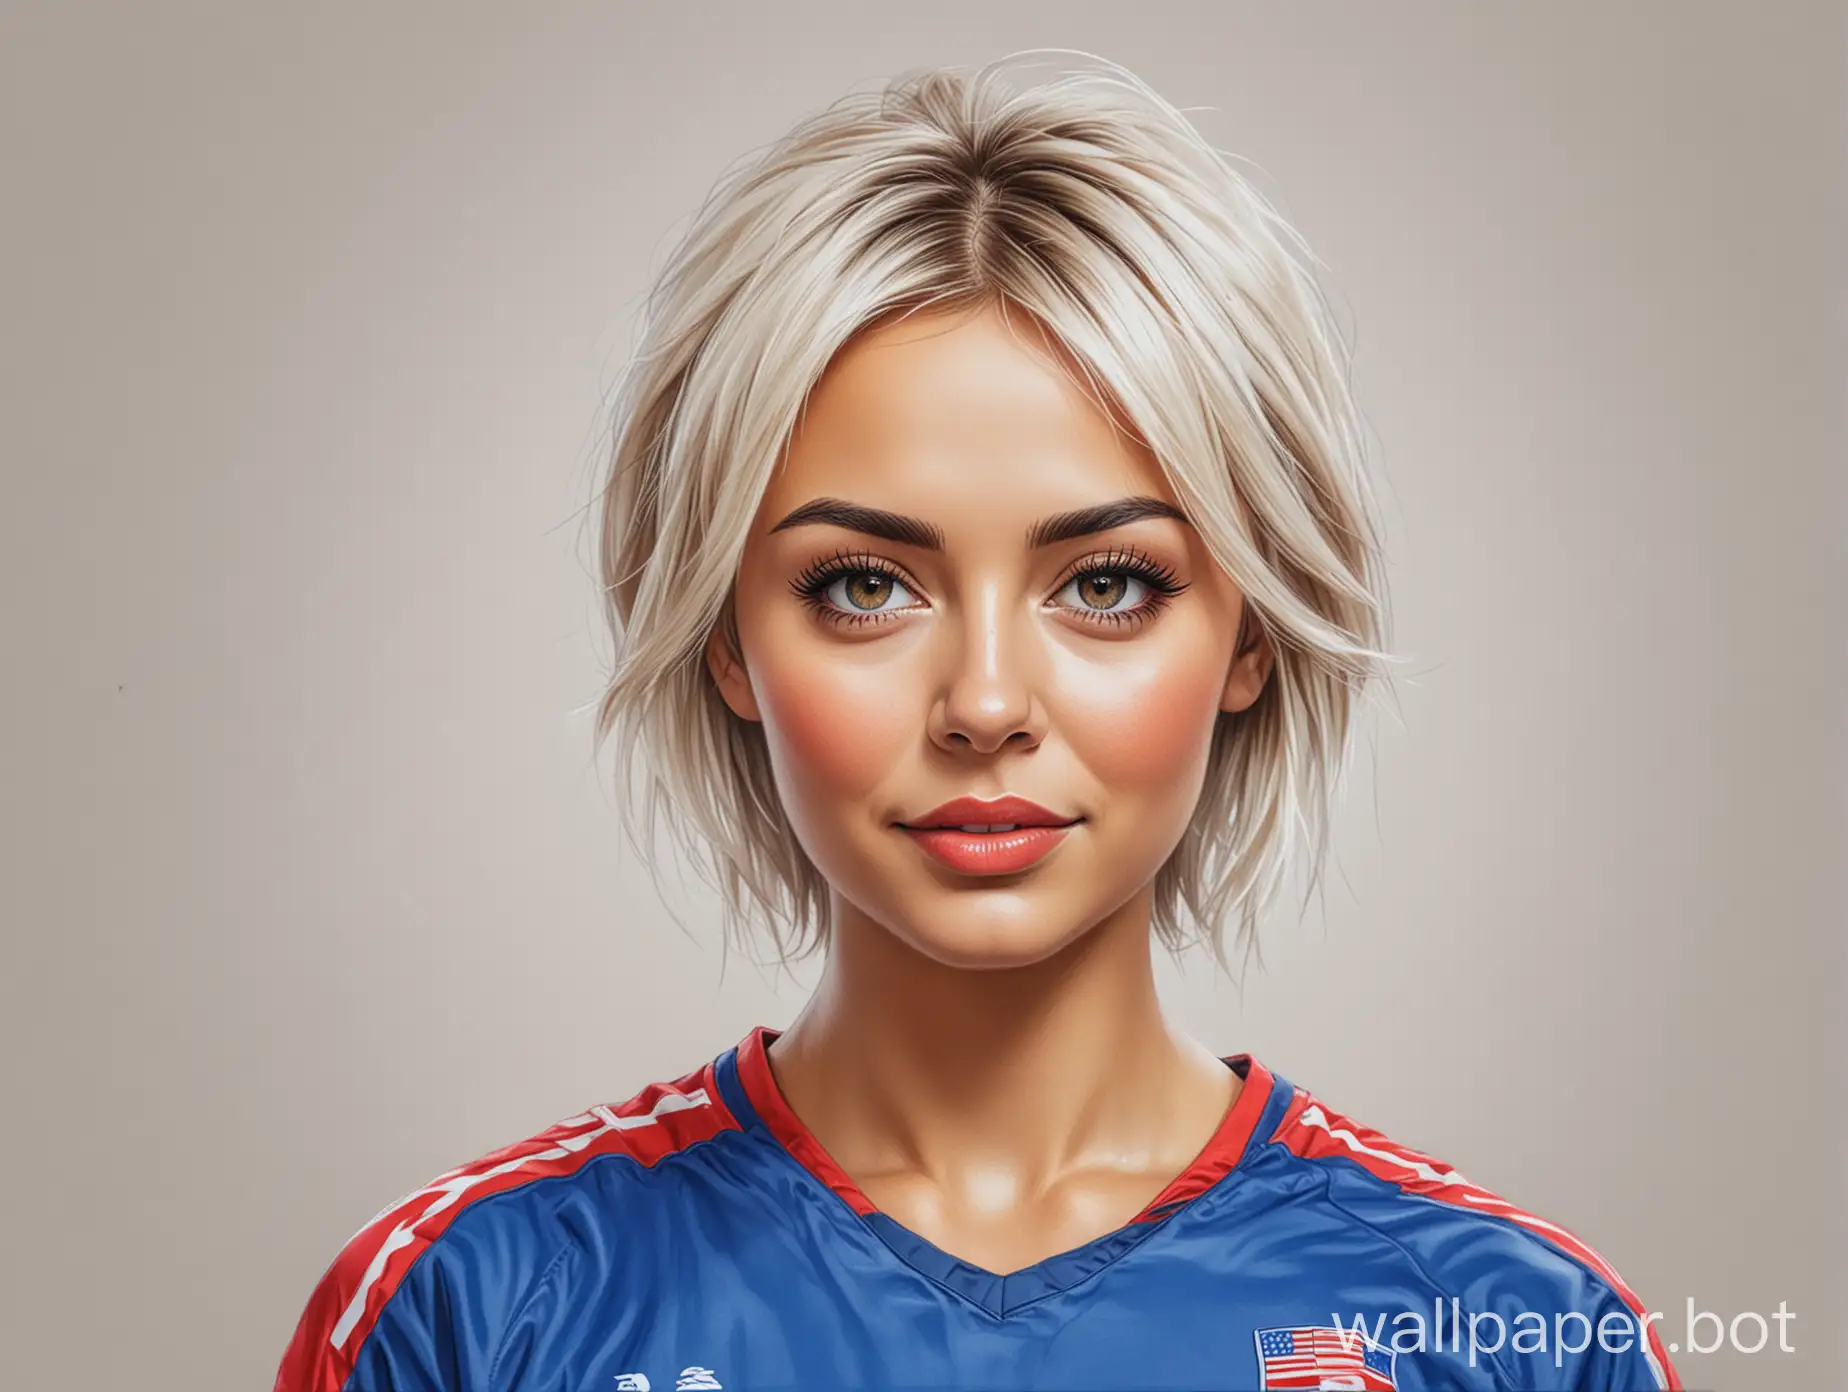 Portrait-Sketch-of-Ani-Lorak-a-Blonde-Woman-in-RedBlue-Soccer-Uniform